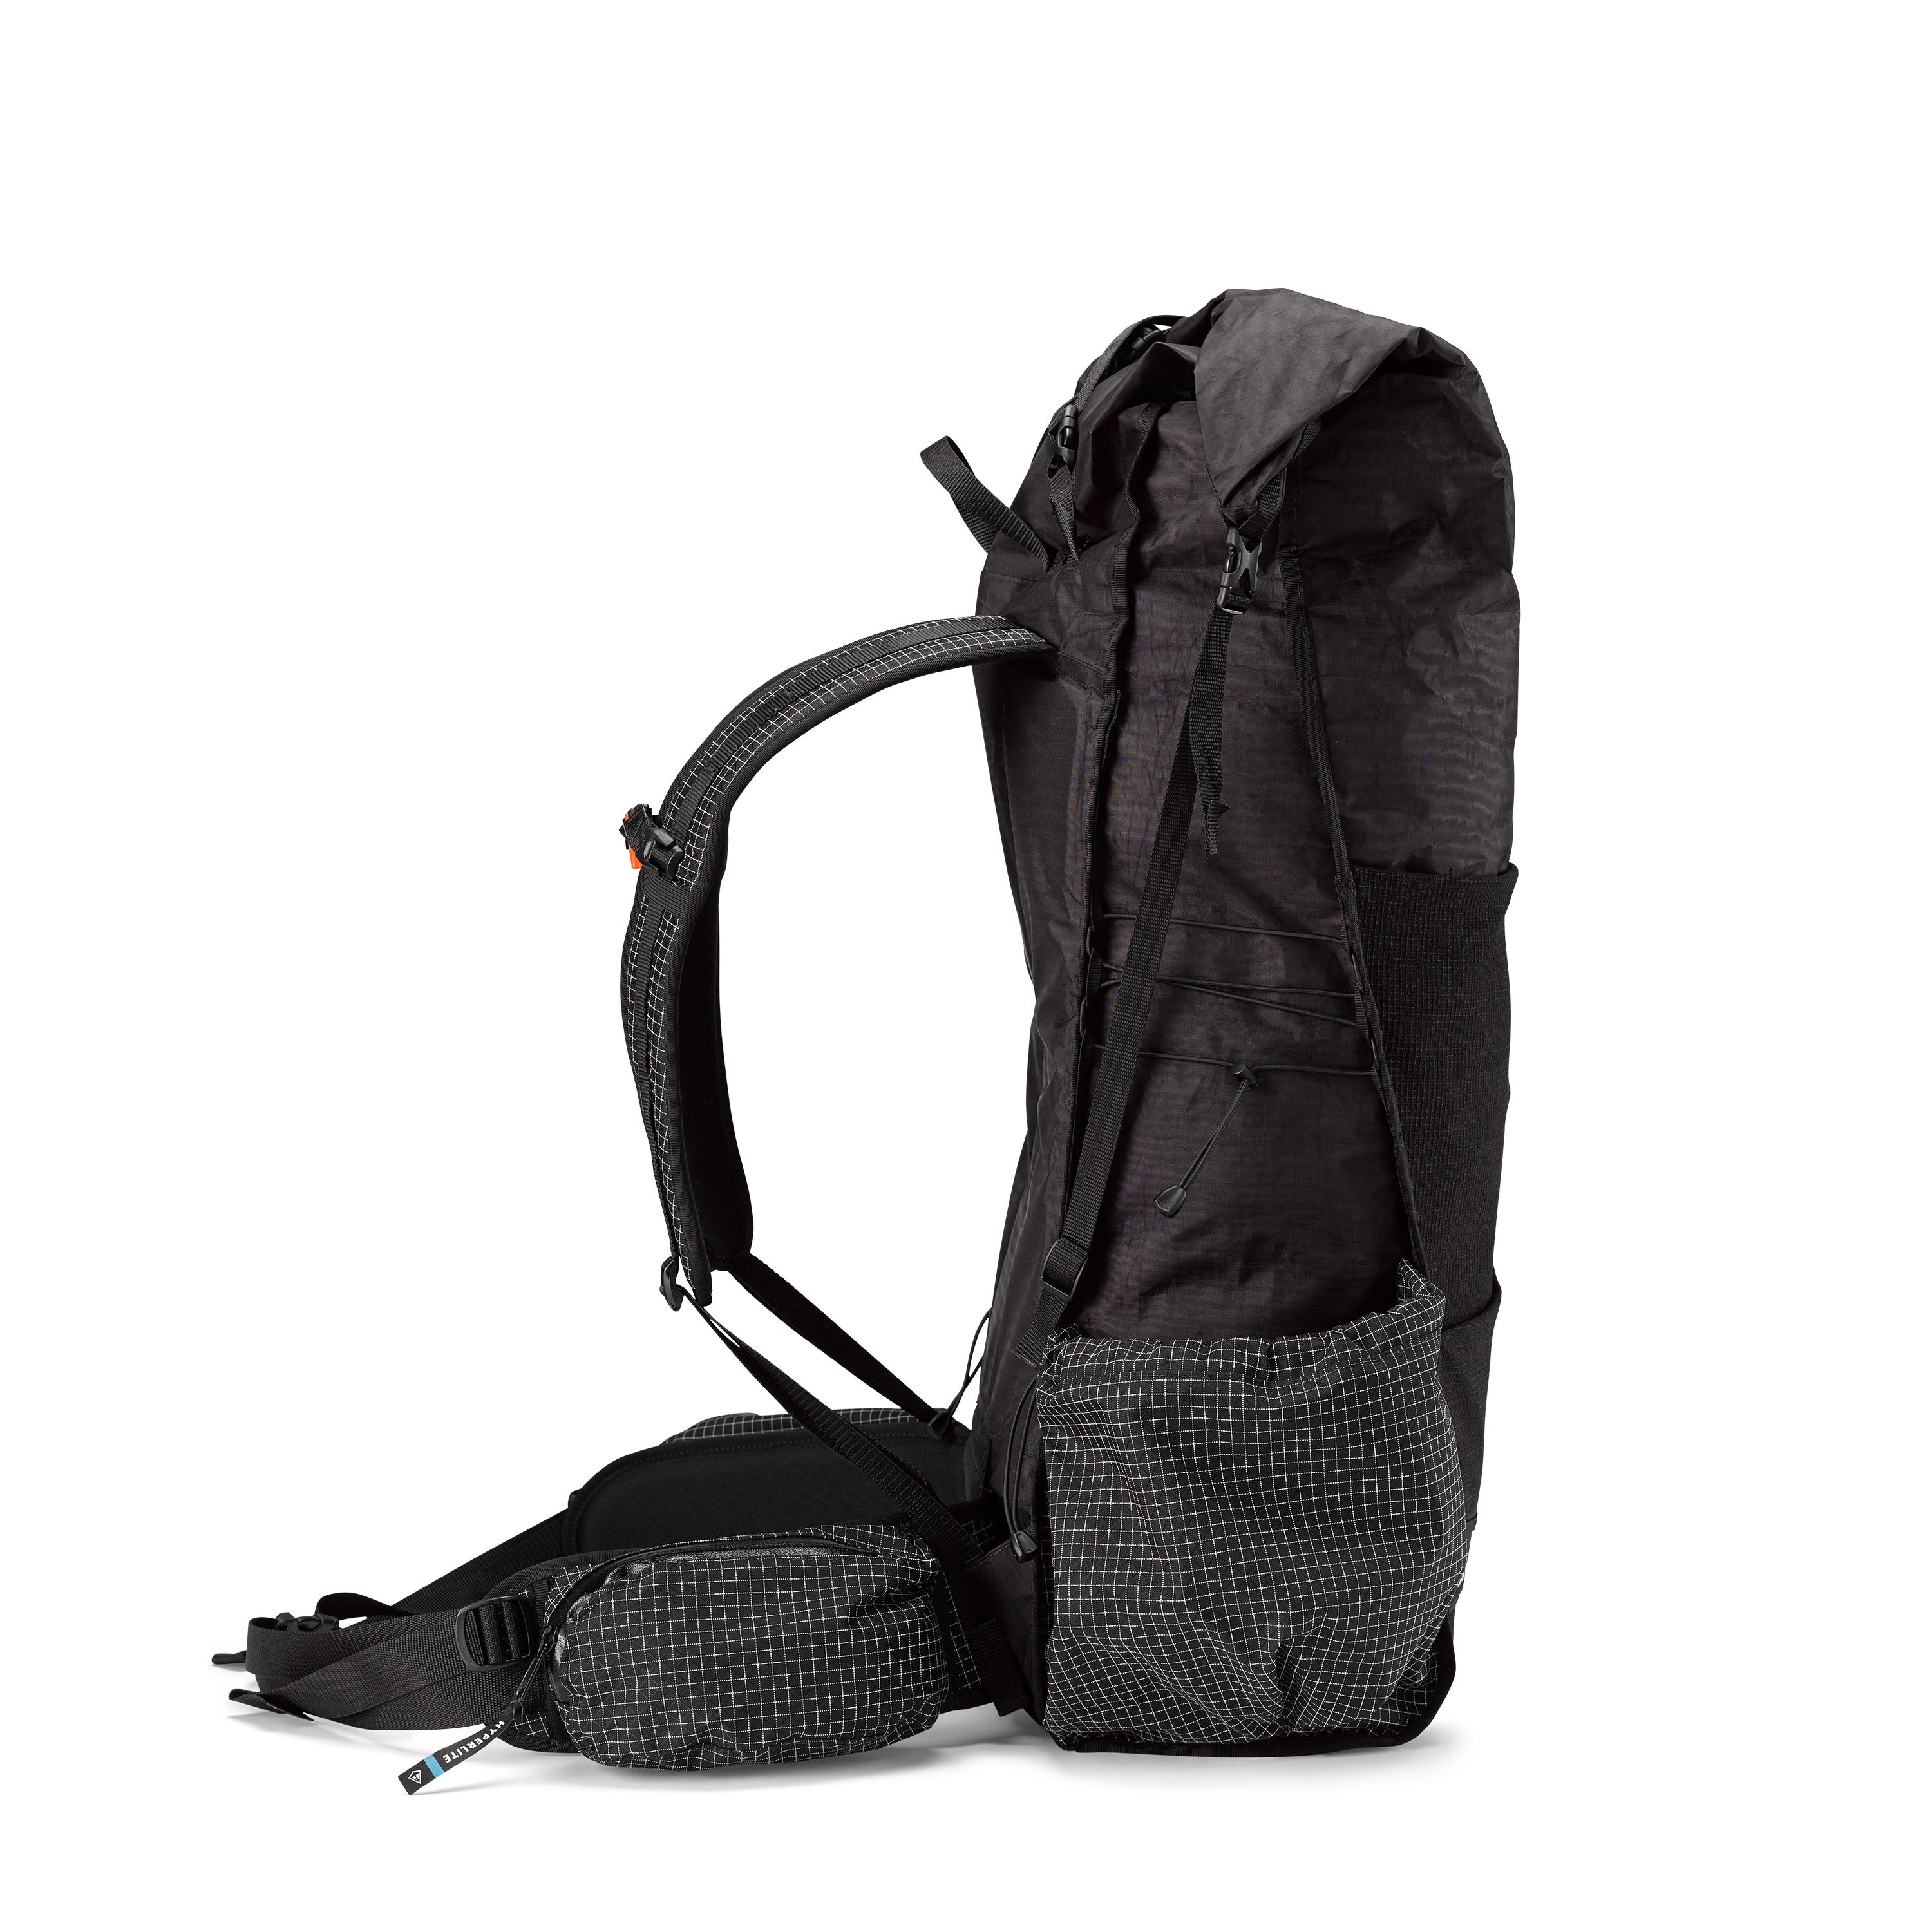 Unbound L Ultralight Thru Hiking Backpack   Hyperlite Mountain Gear